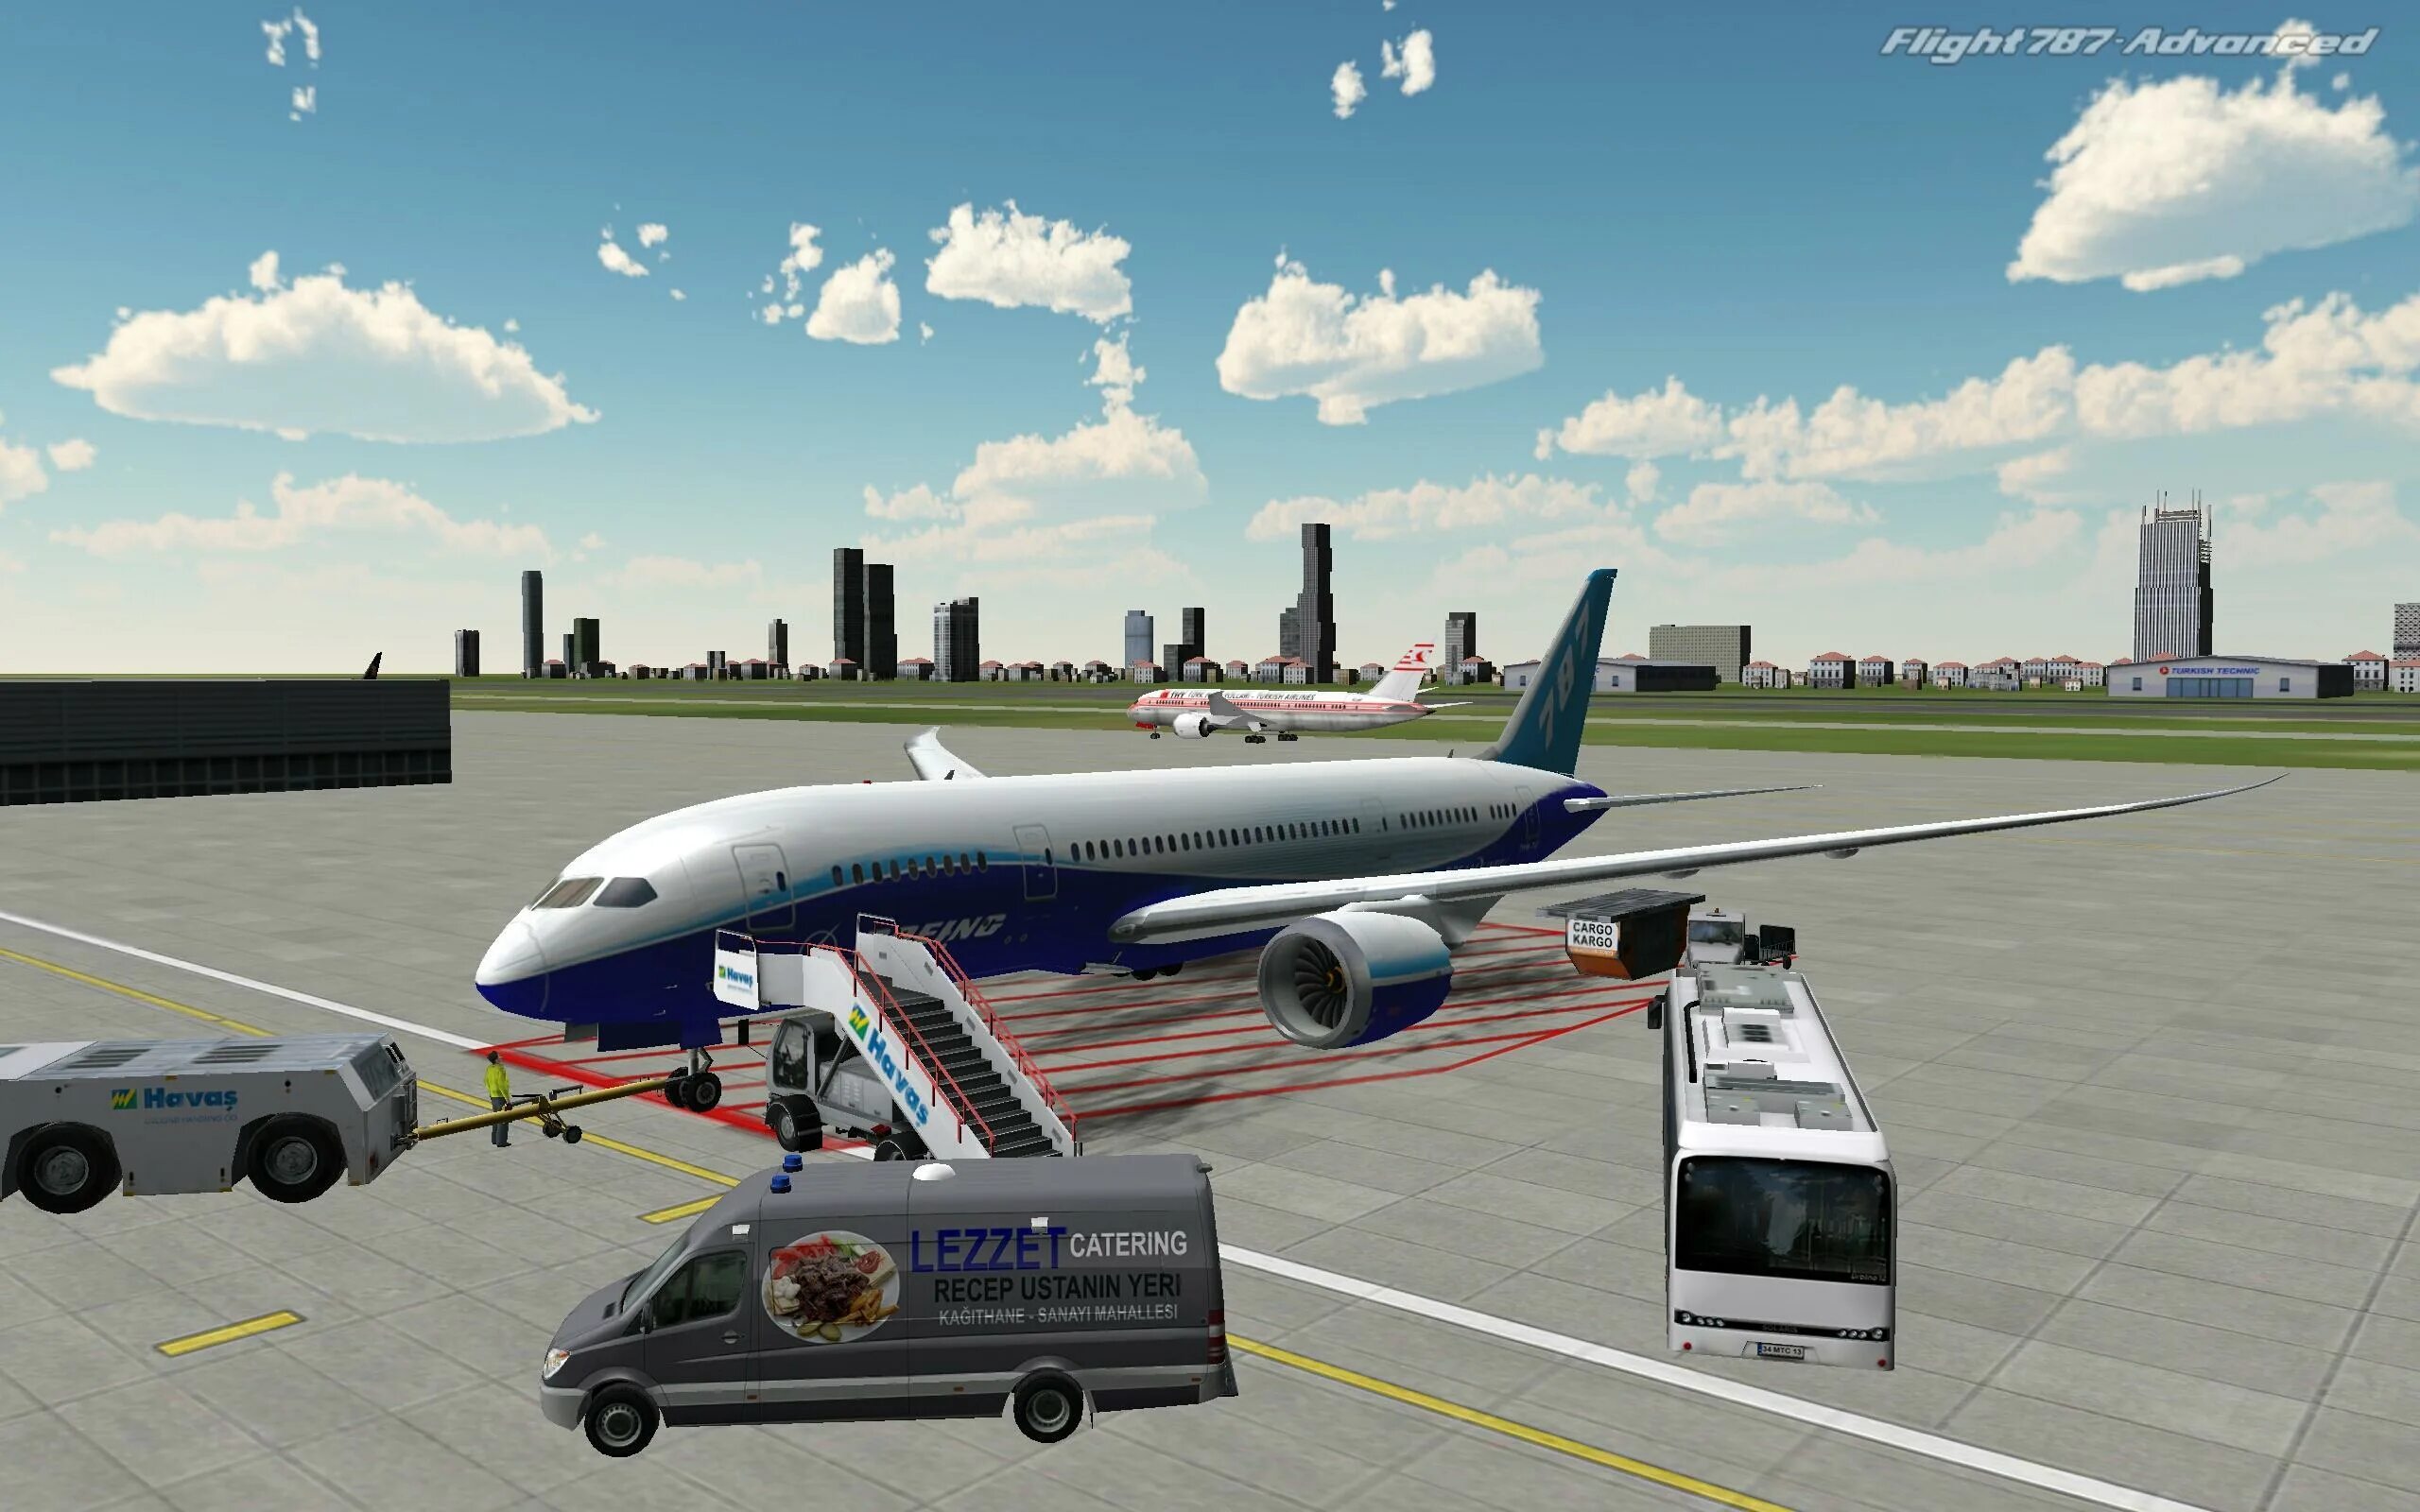 Flight 787 - Advanced. Реал Флайт симулятор. Авиасимулятор ВДНХ. Симулятор самолета пассажирского. Новая игра самолета